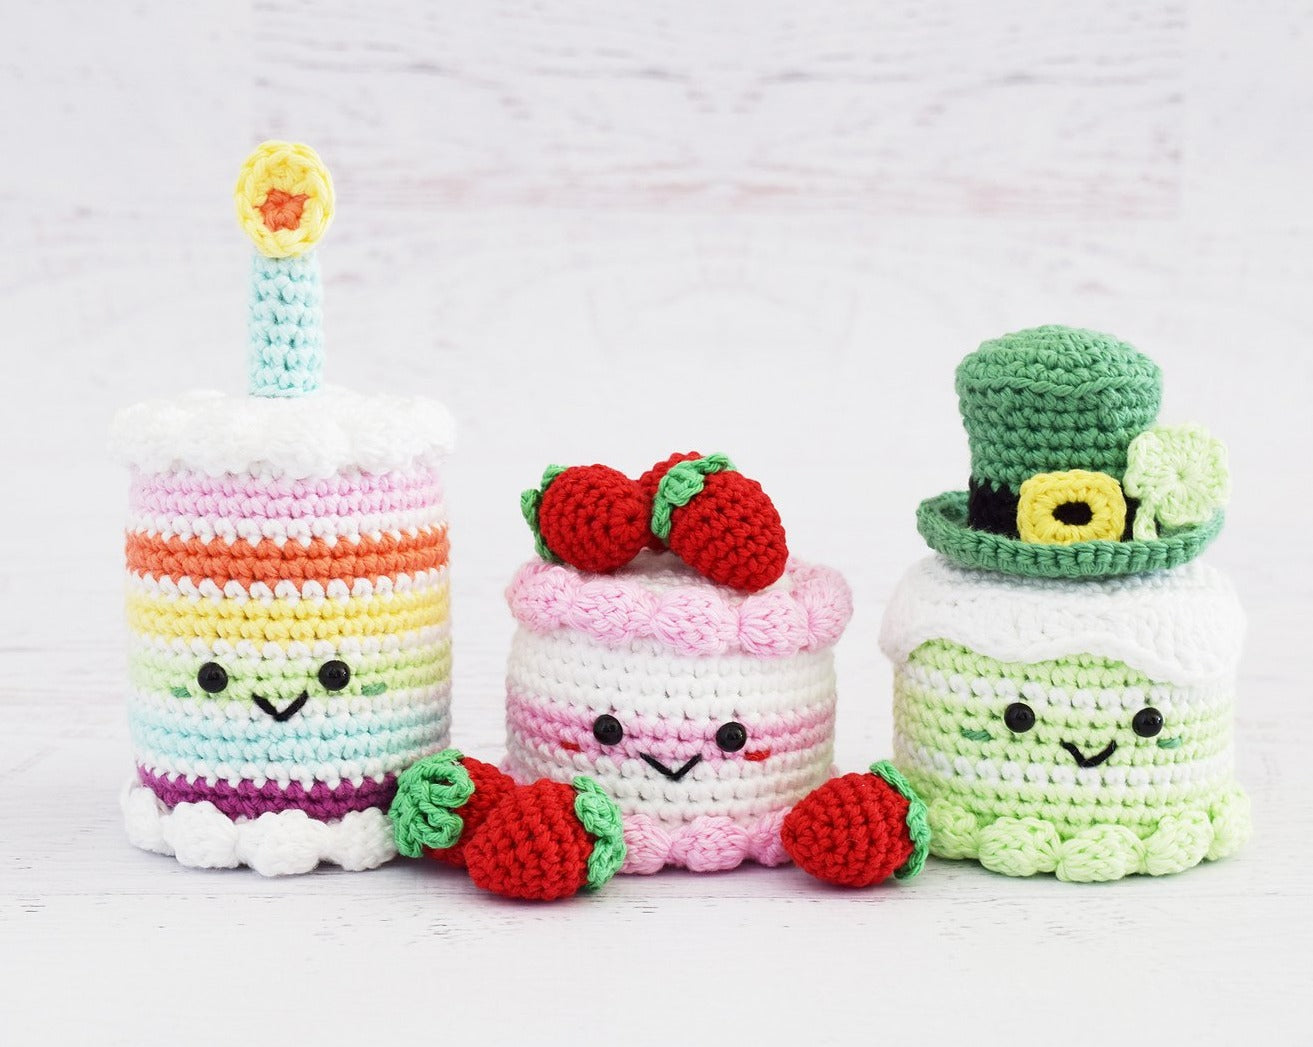 Kawaii Crochet: 40 Super Cute Crochet Patterns for Adorable Amigurumi a book  by Melissa Bradley